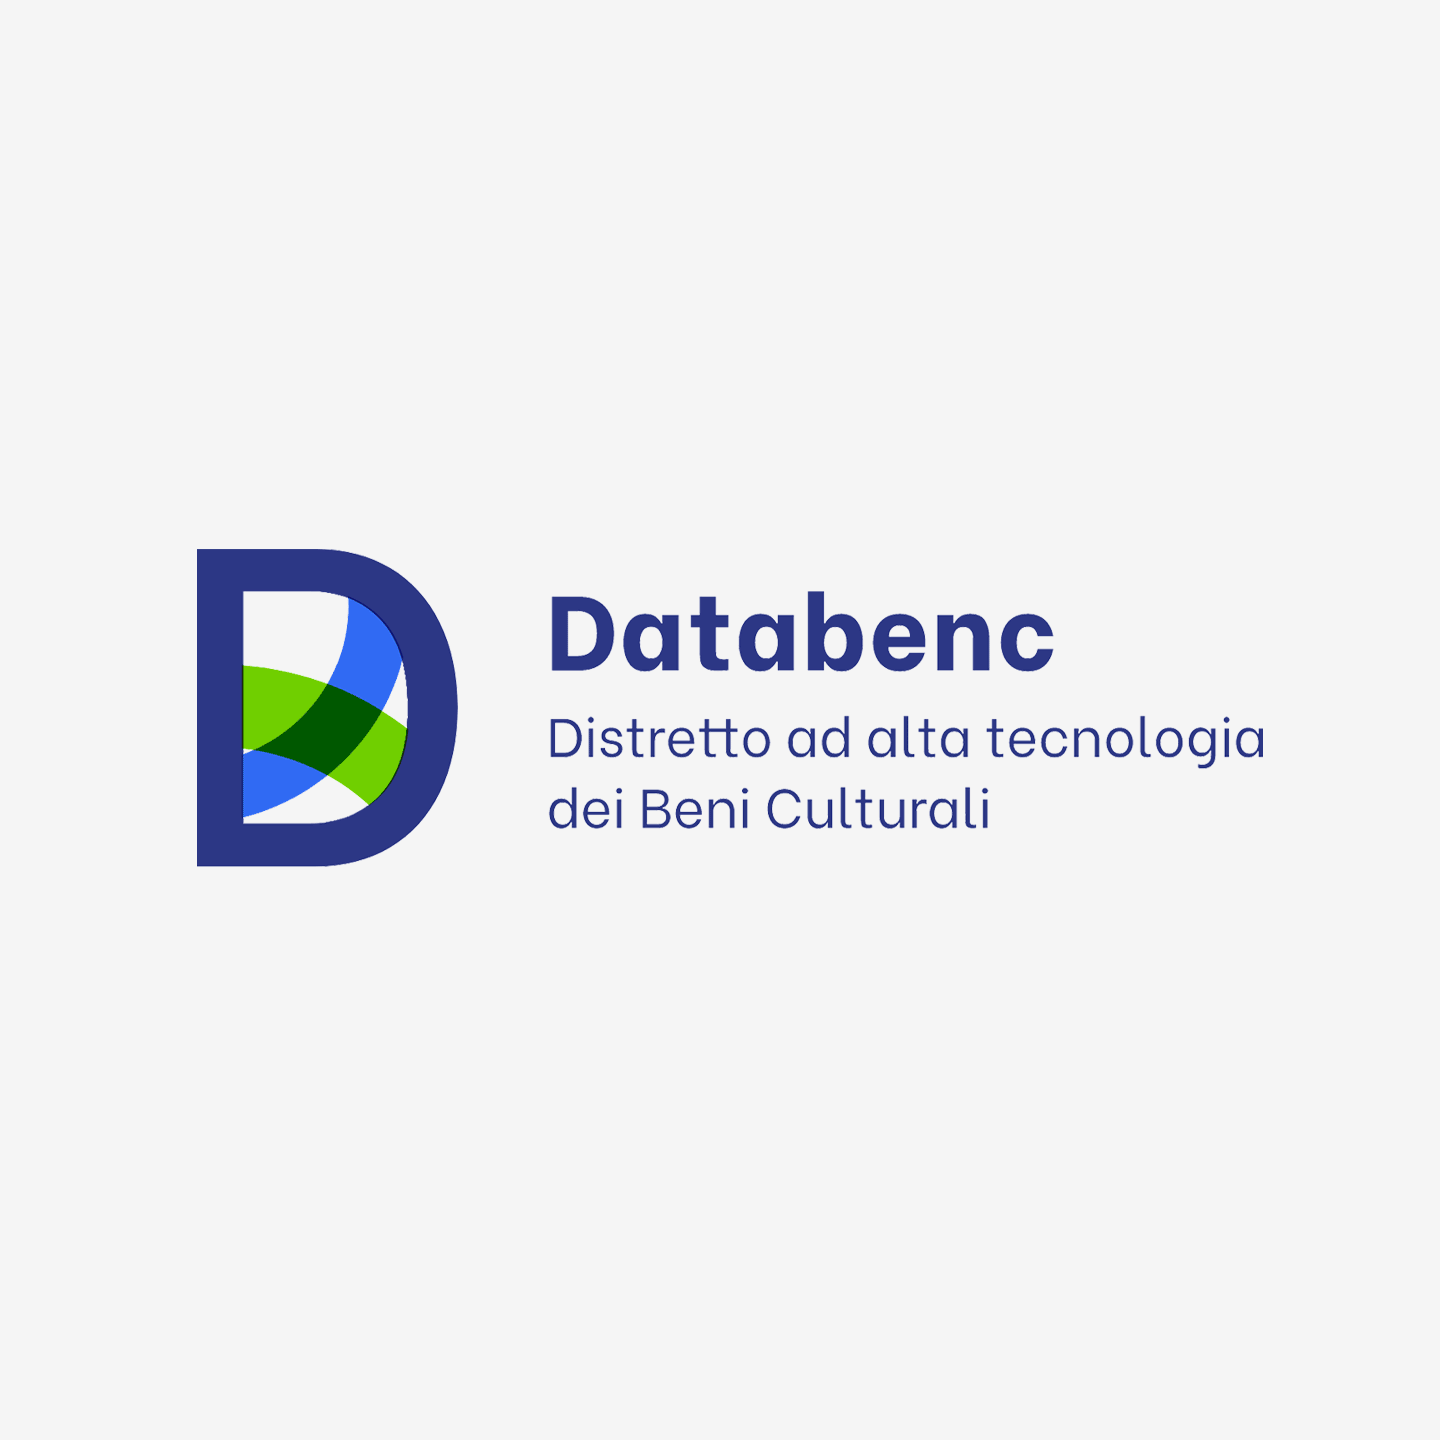 Databenc Rebranding